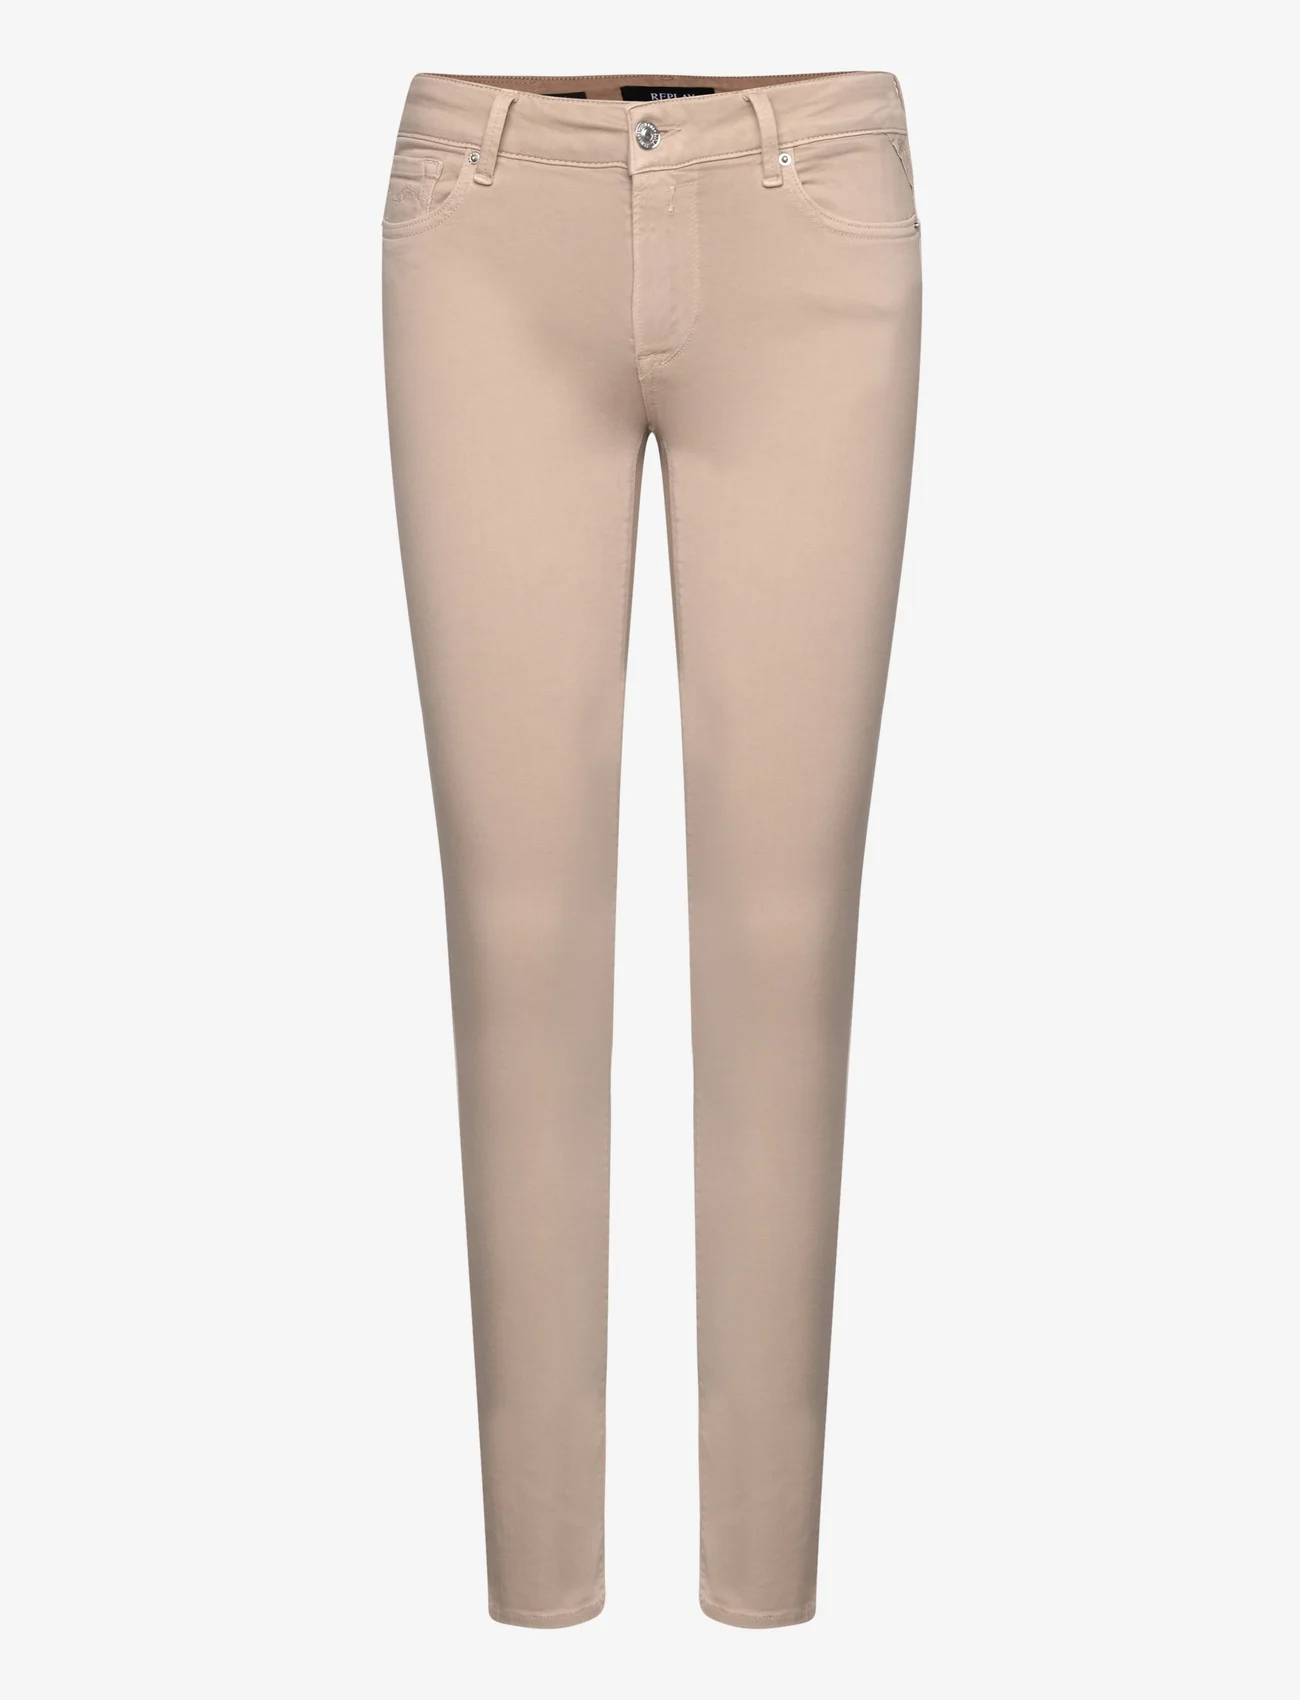 Replay - NEW LUZ Trousers SKINNY Hyperflex Colour XLite - dżinsy skinny fit - beige - 0